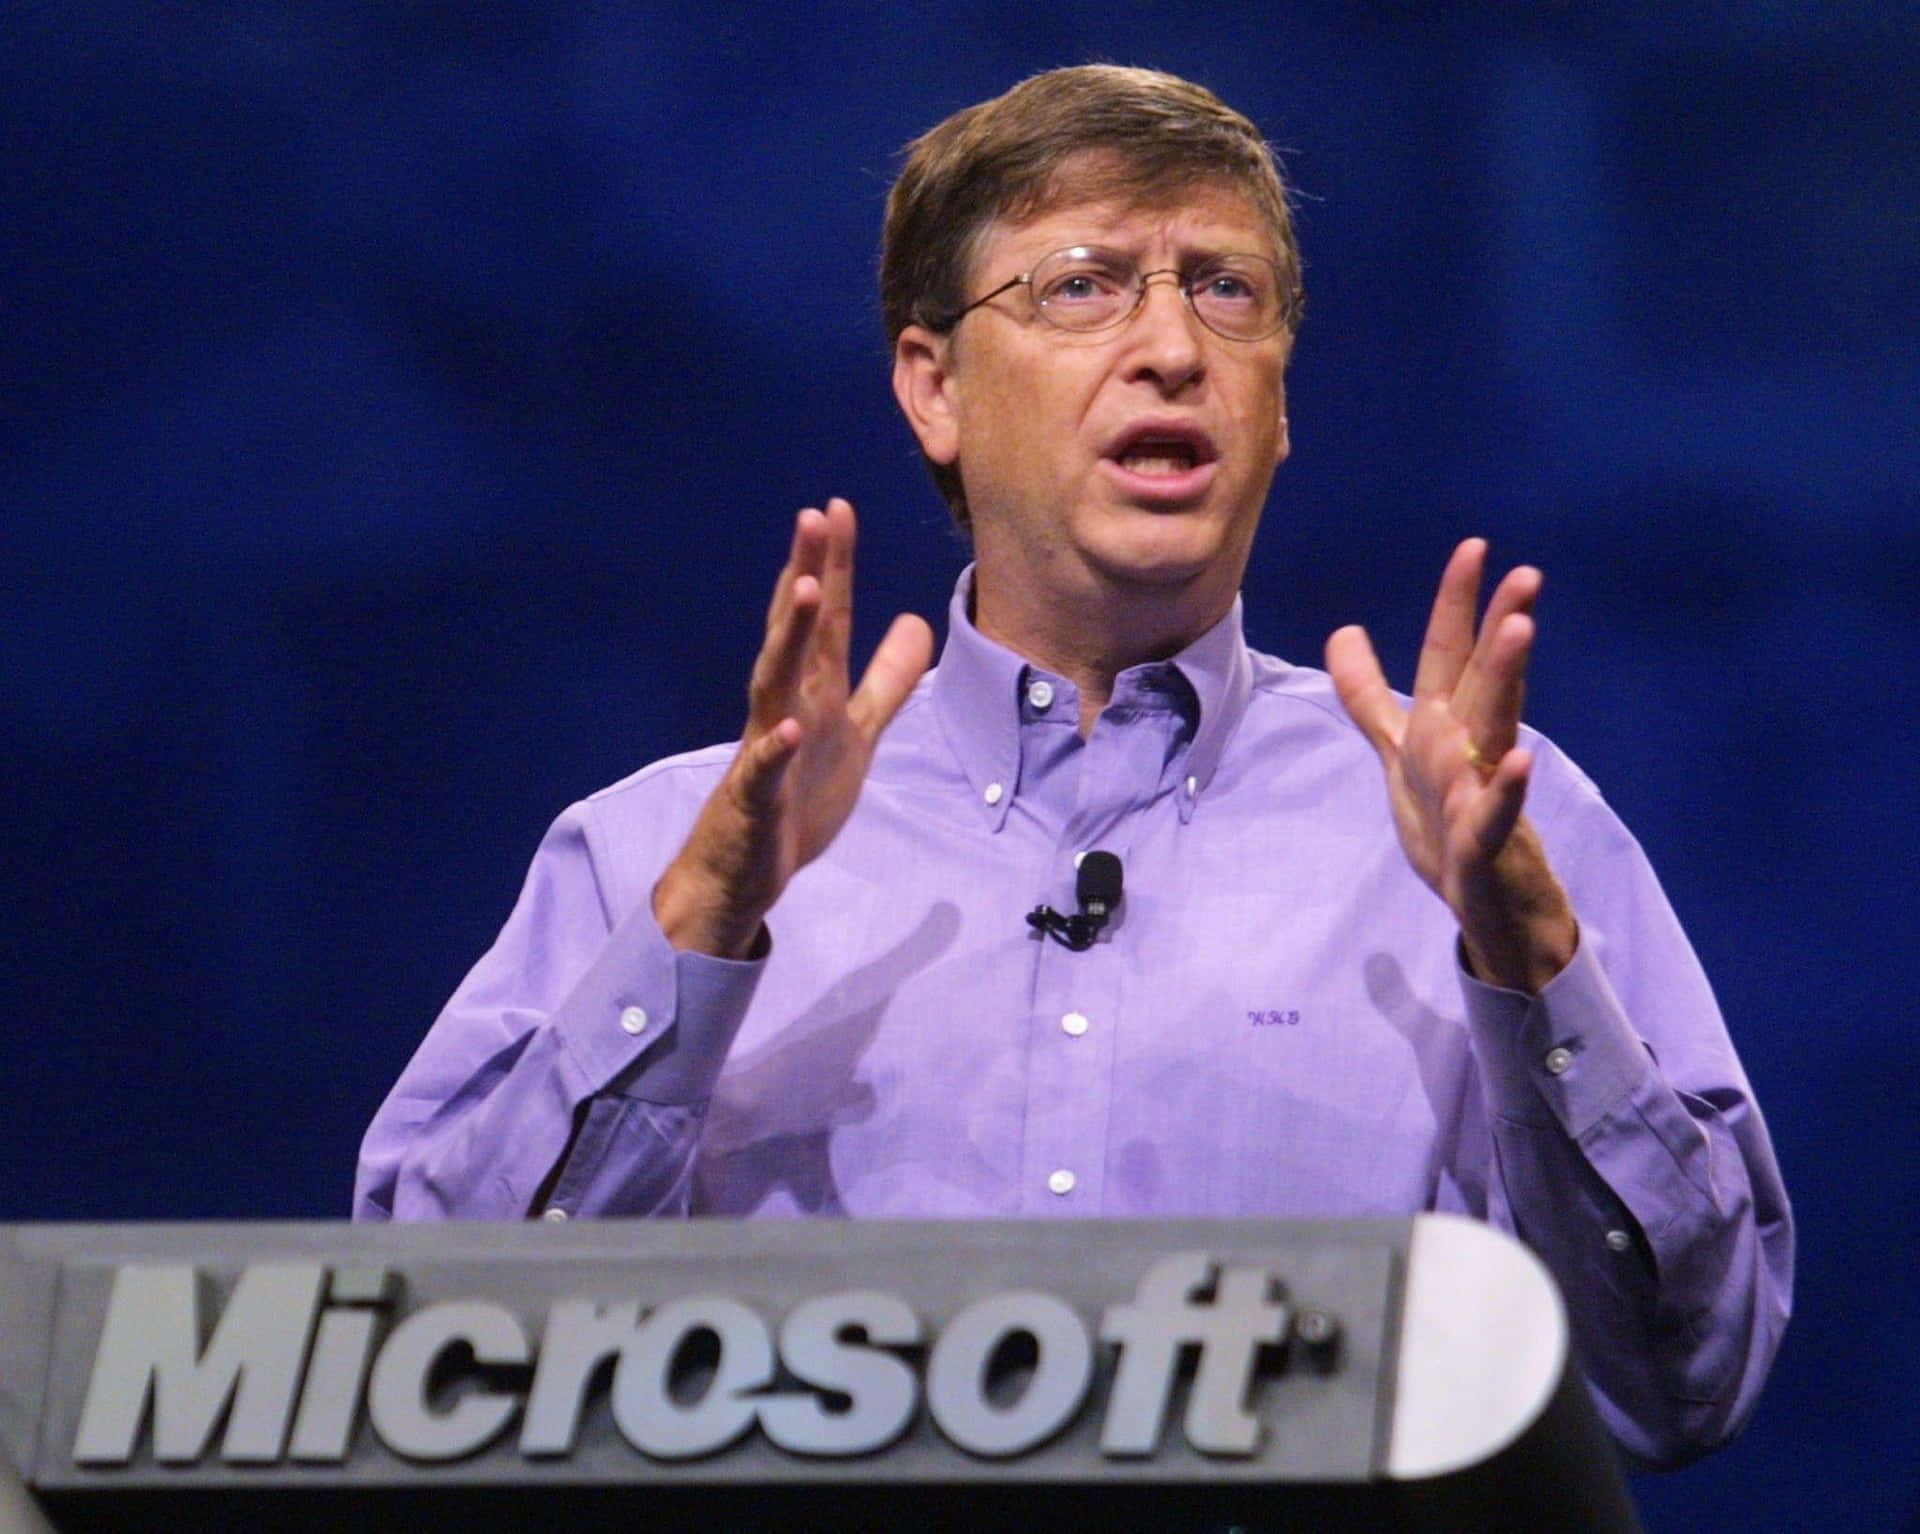 Bill Gates - Microsoft Founder